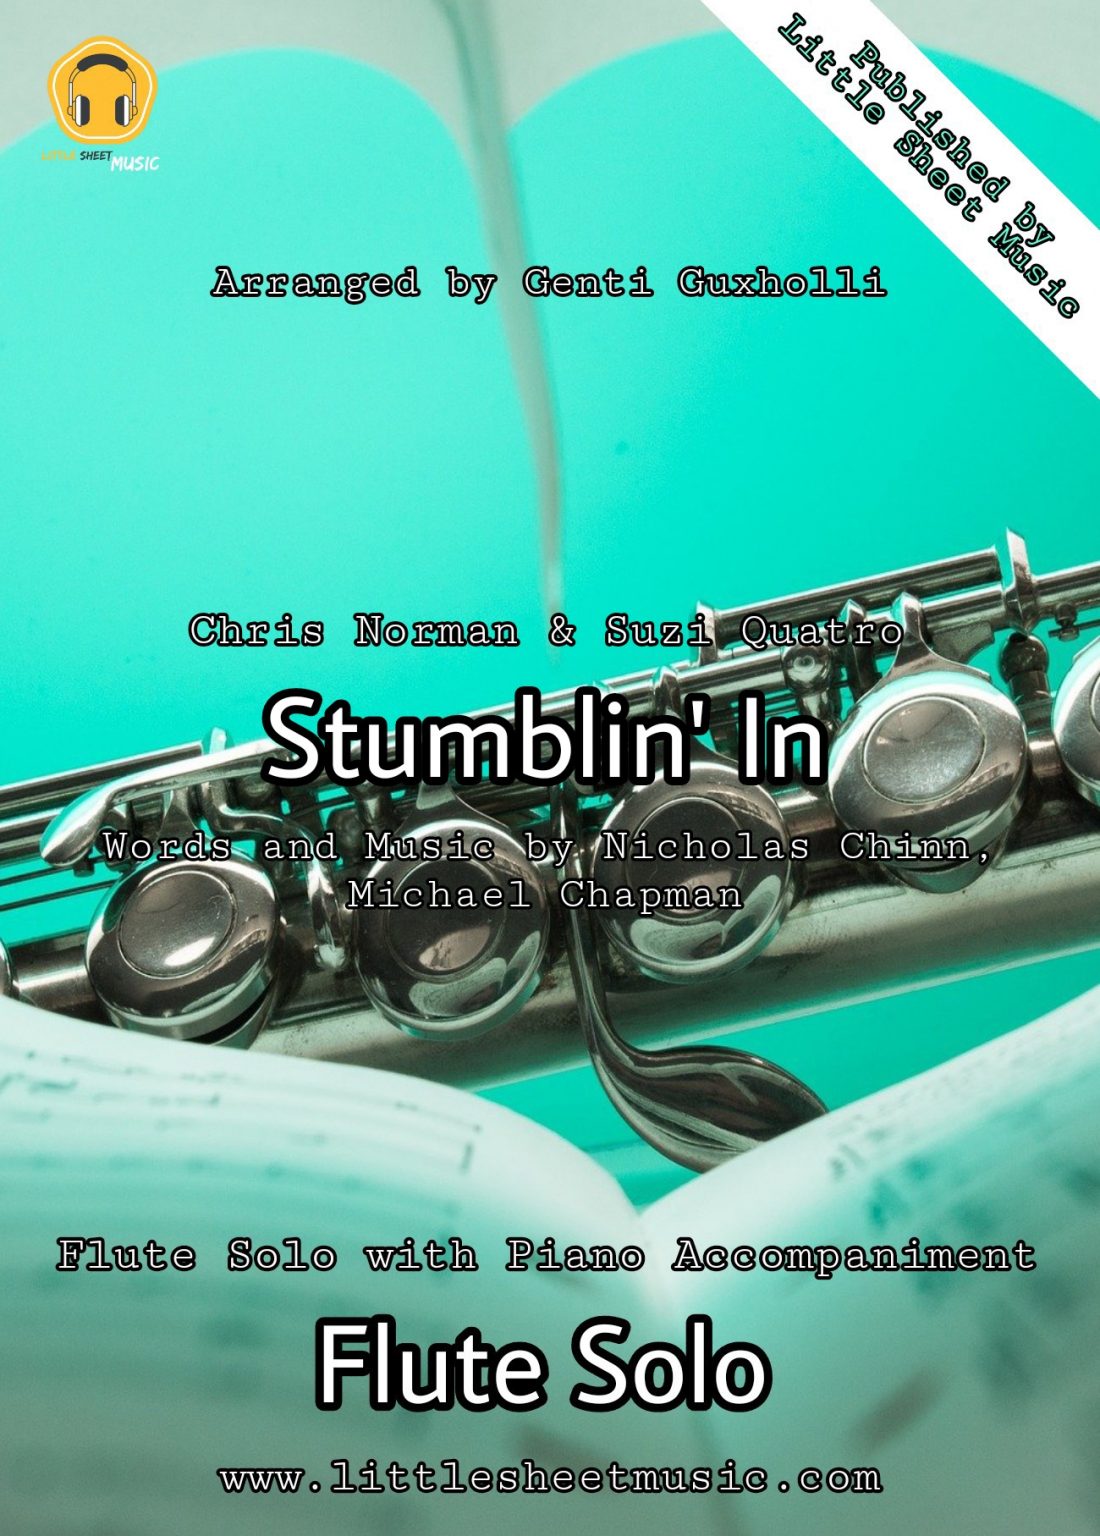 Chris Norman And Suzi Quatro Stumblin In Flute Solo Littlesheetmusic